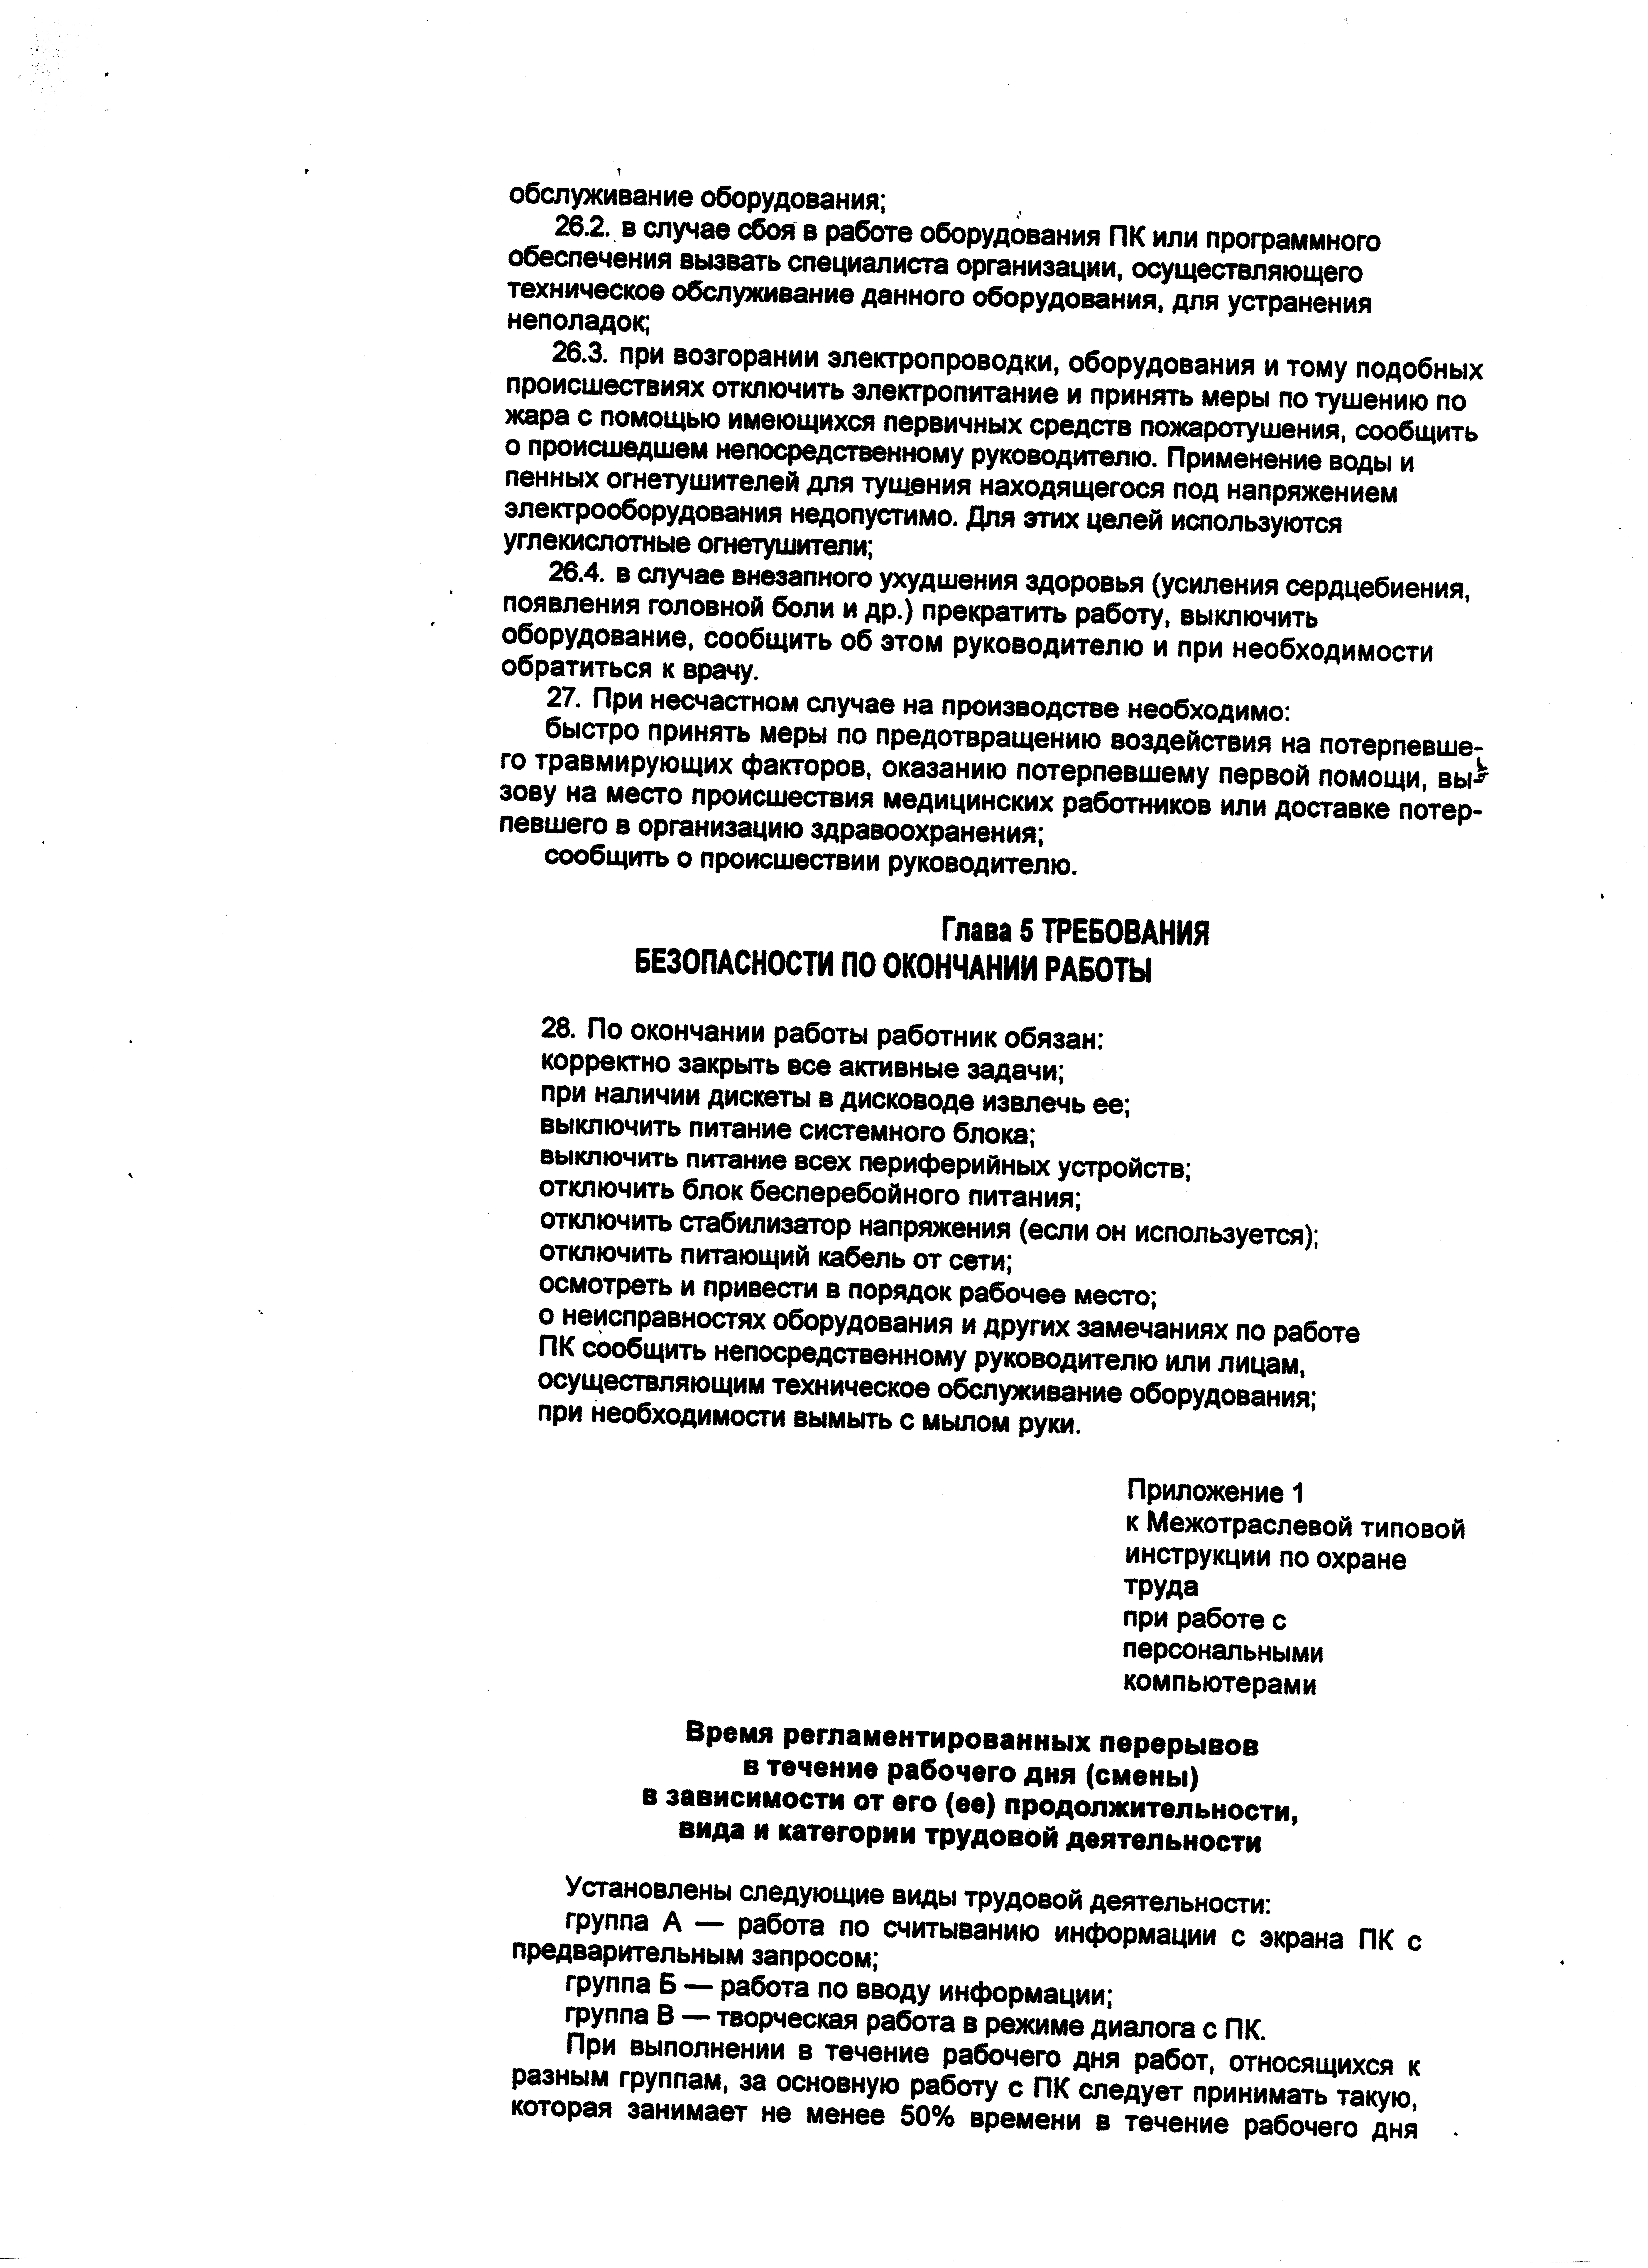 Инструкция по охране труда при работе на ПЭВМ с использованием ВДТ - student2.ru